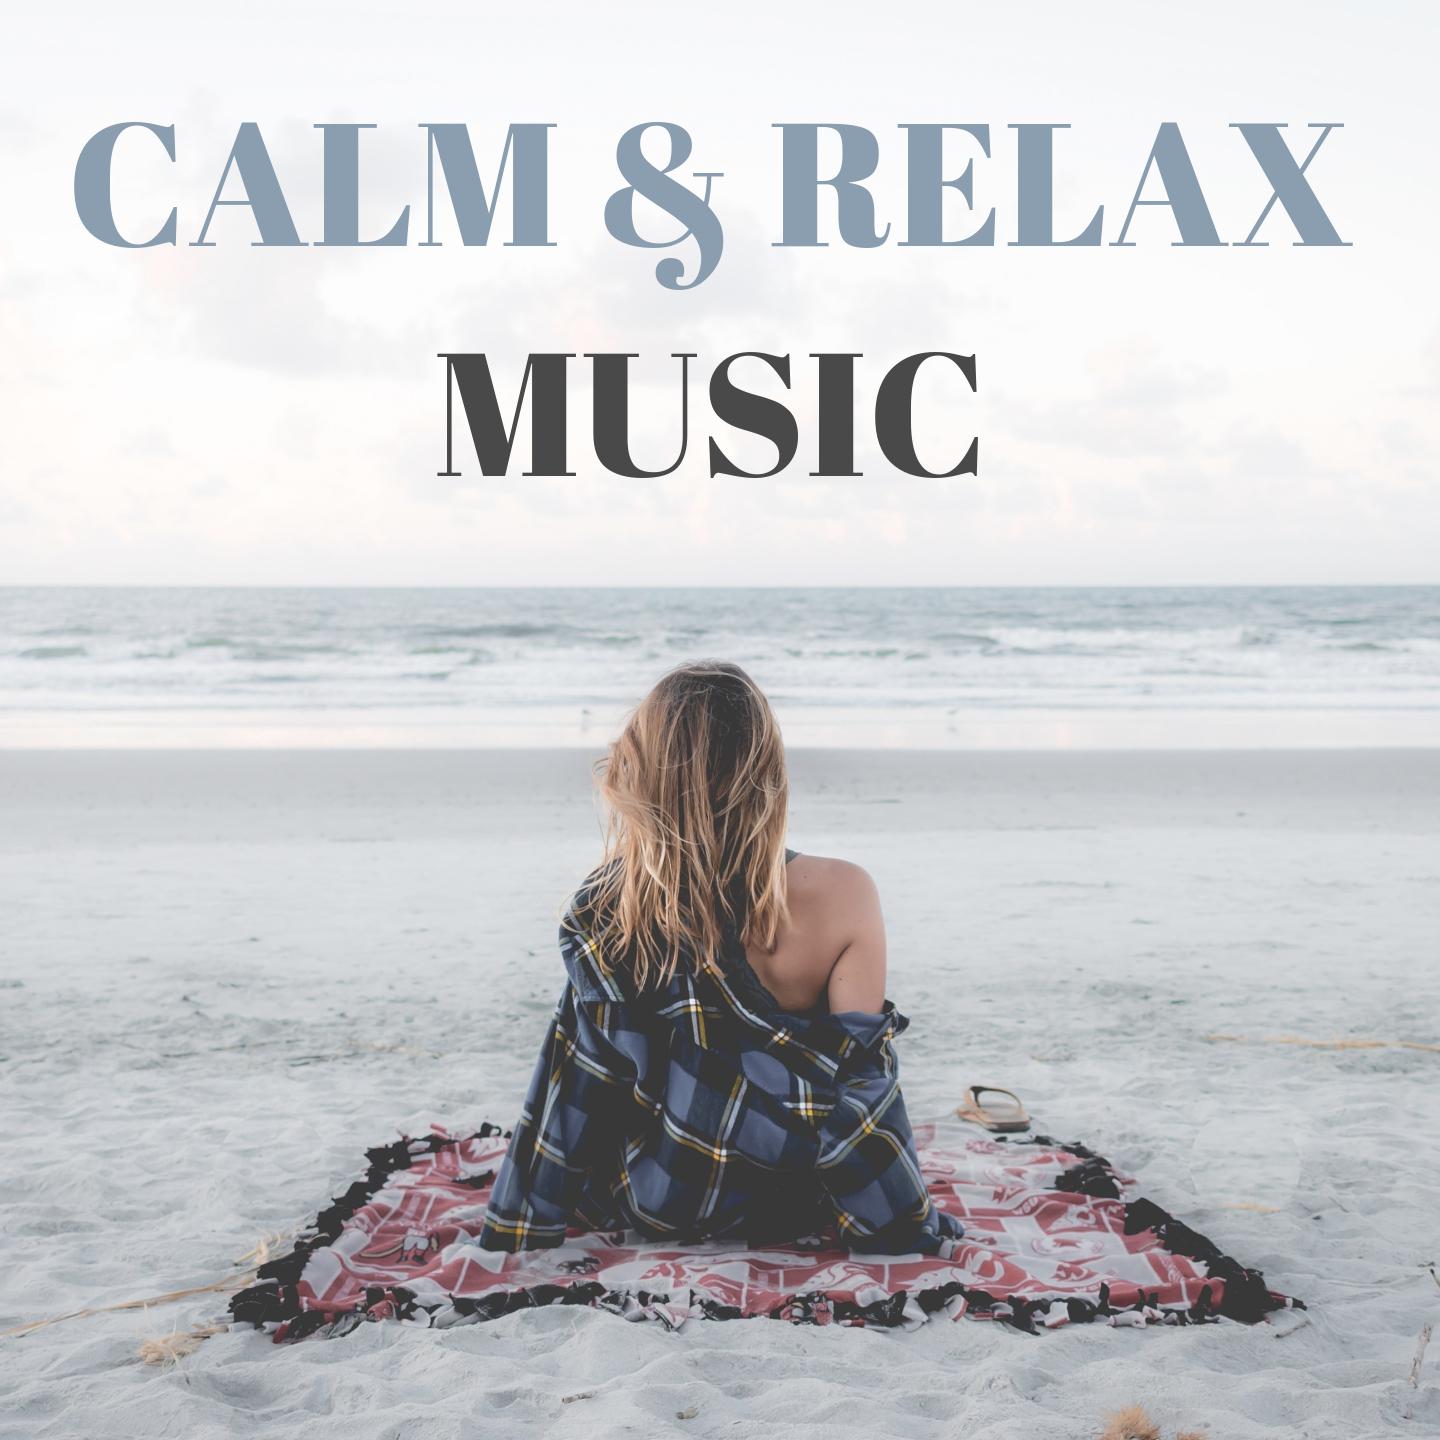 Calm & Relax Music